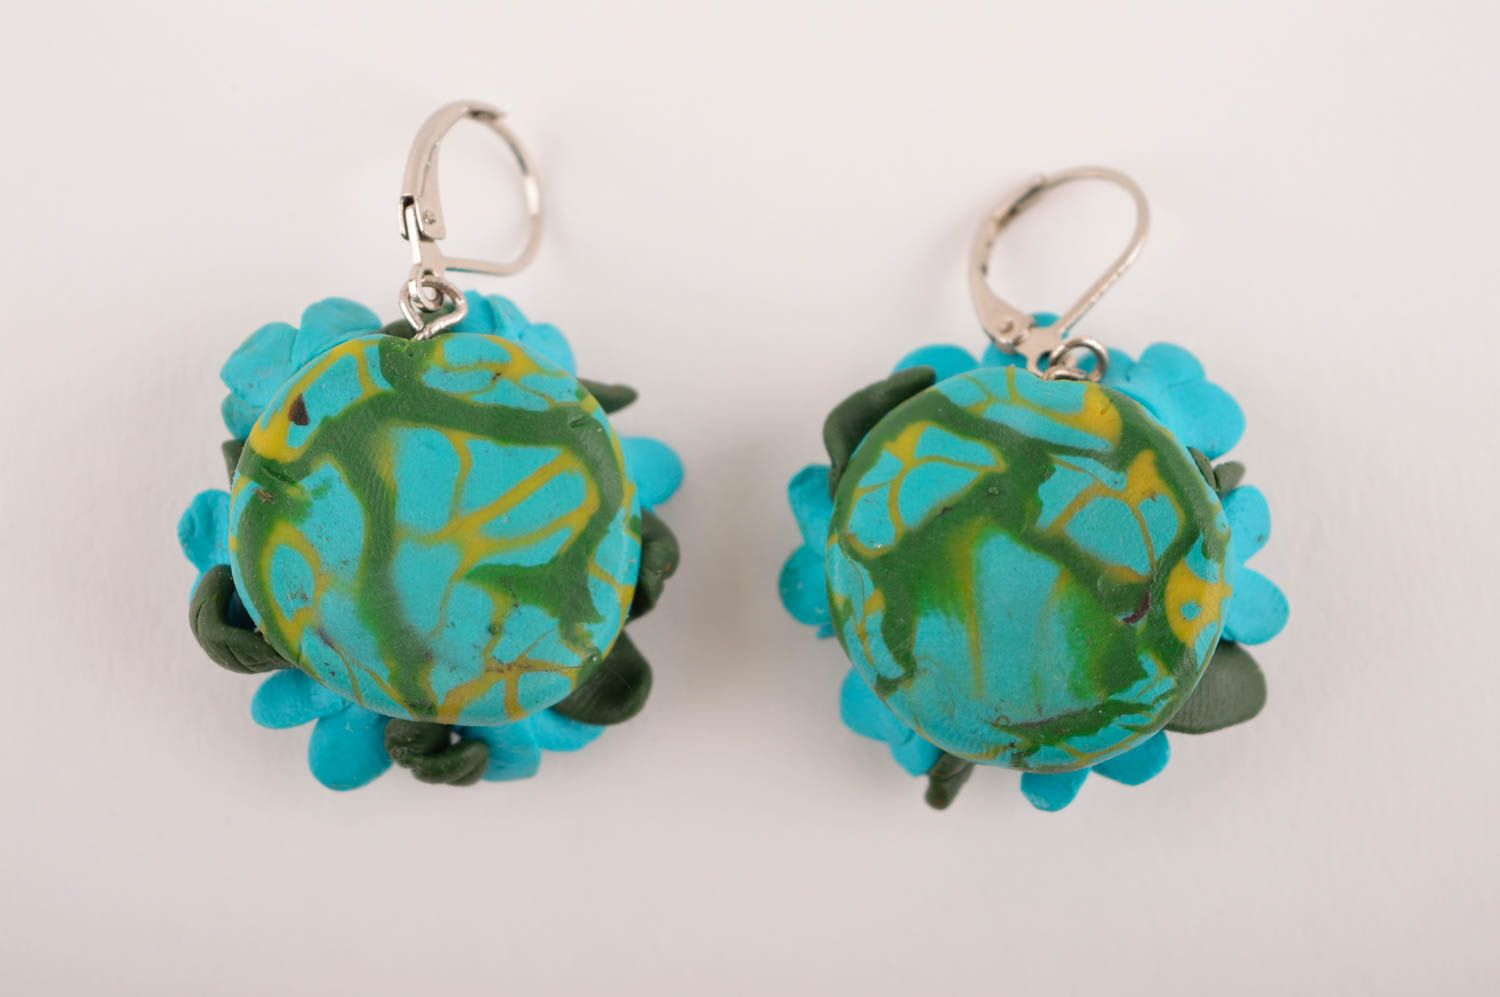 Handmade earrings polymer clay earrings unusual accessory for women gift ideas photo 5